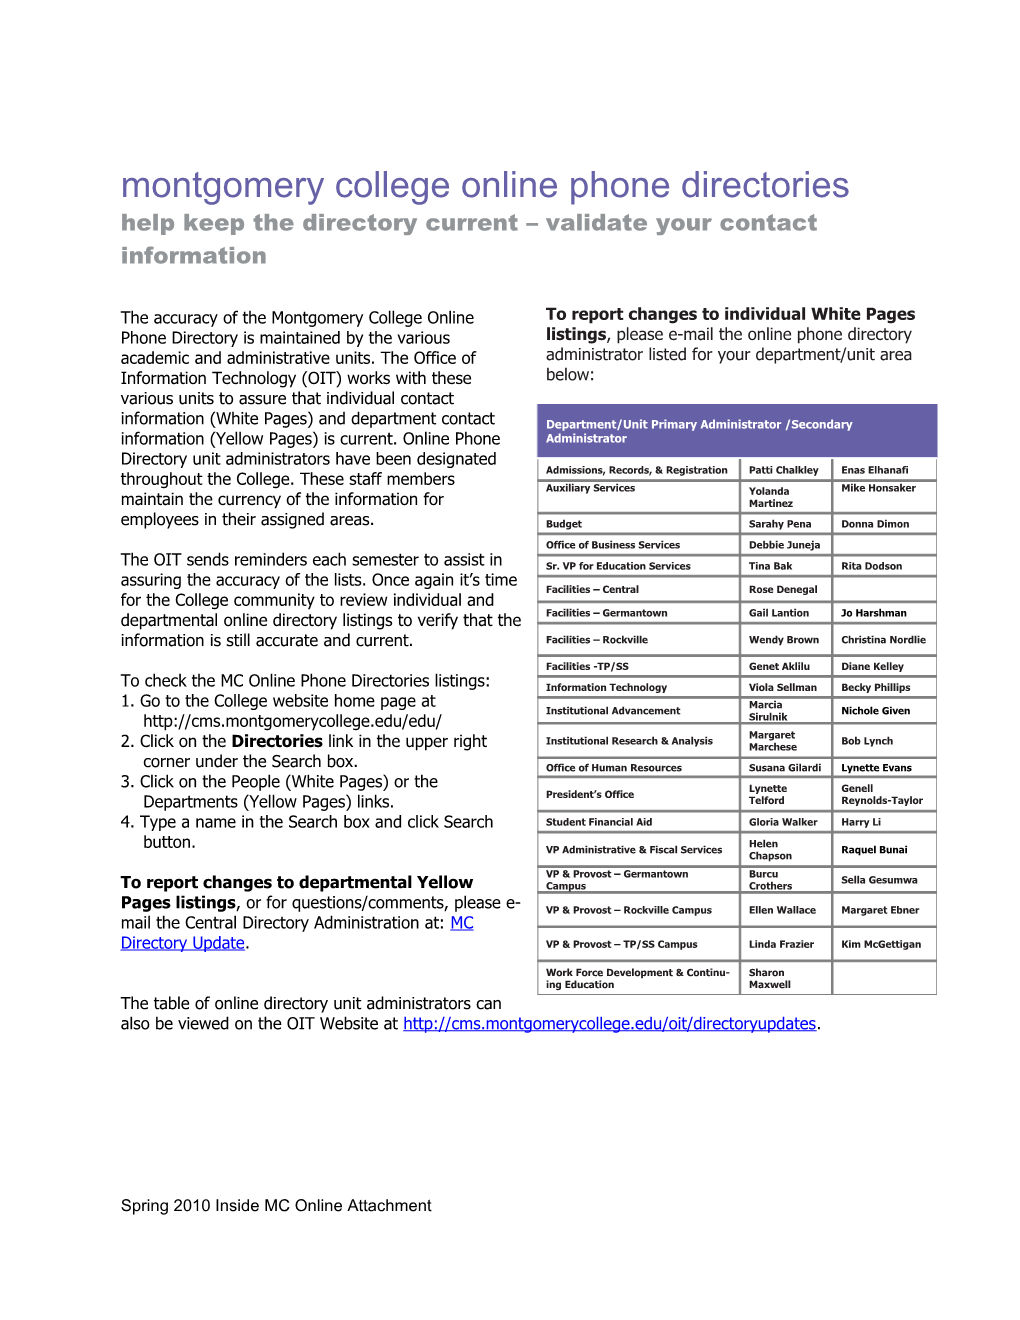 Montgomery College Online Phone Directories